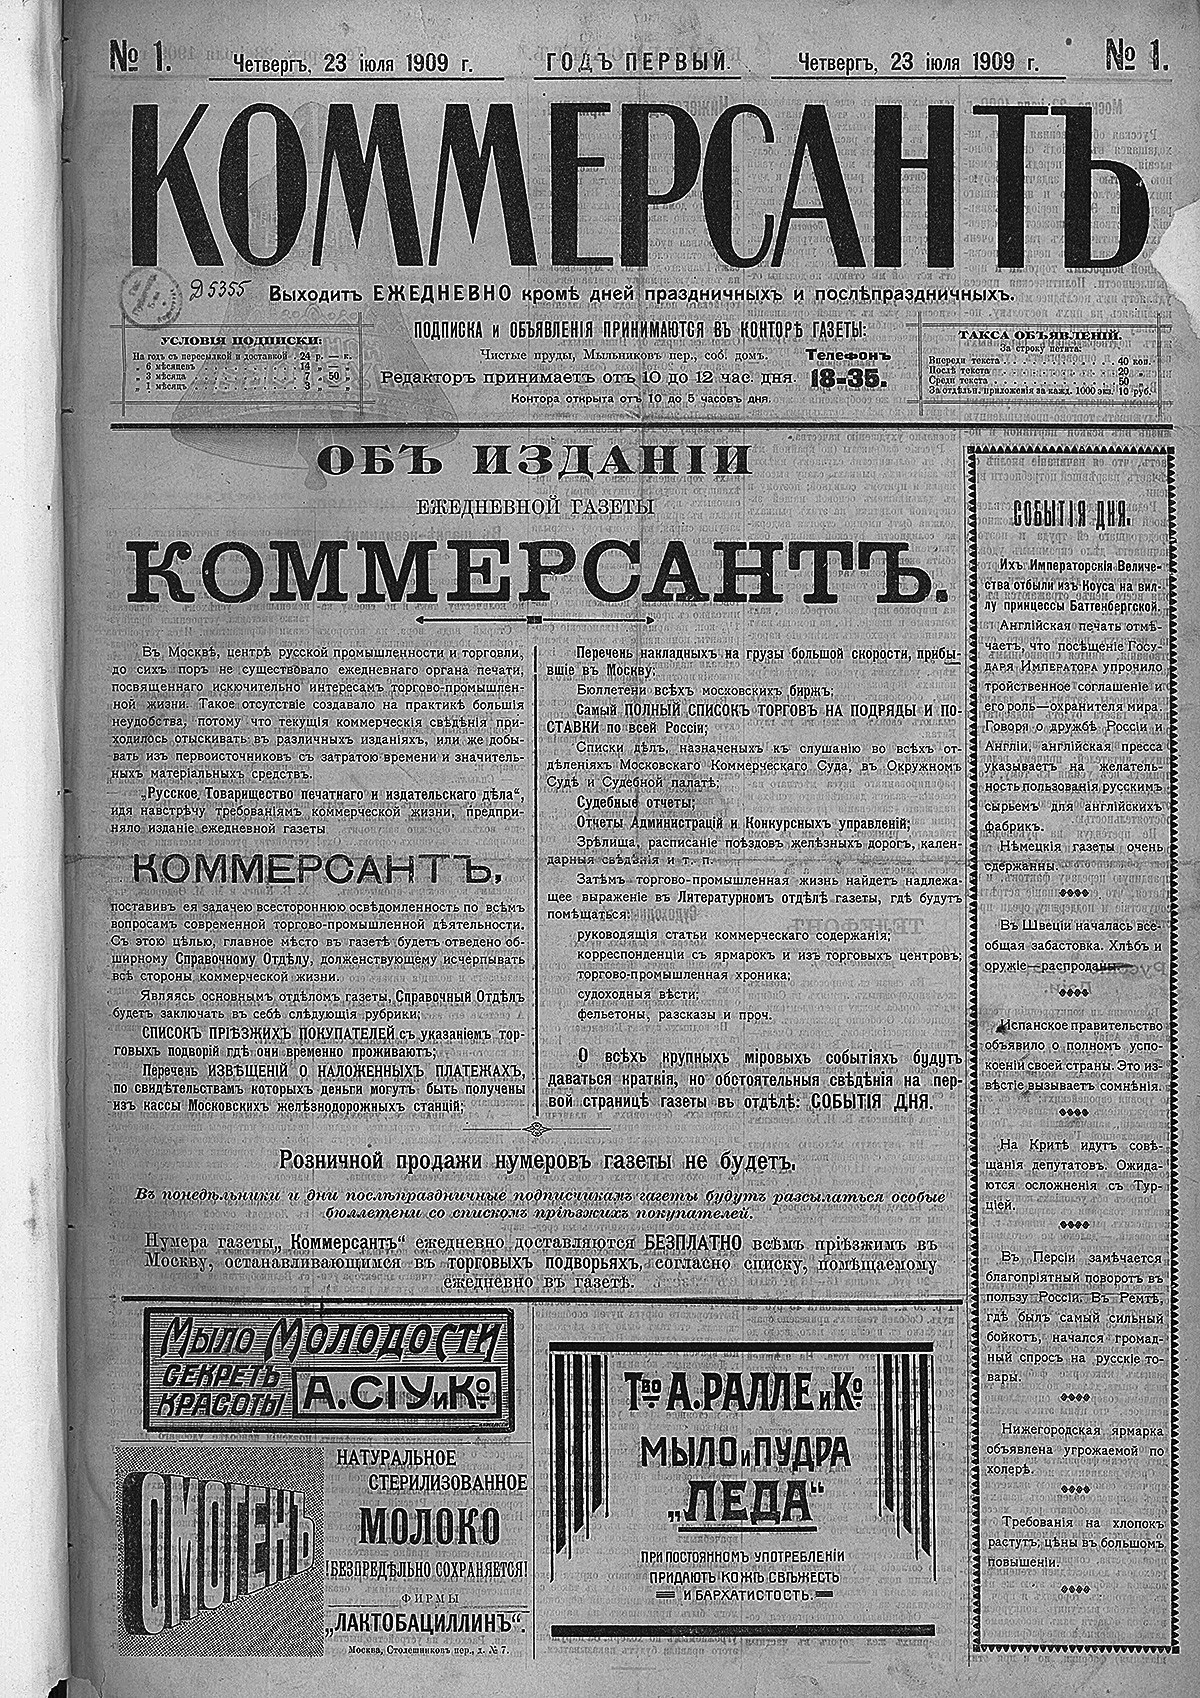 Surat kabar Kommersant pra-Revolusi, 1909
